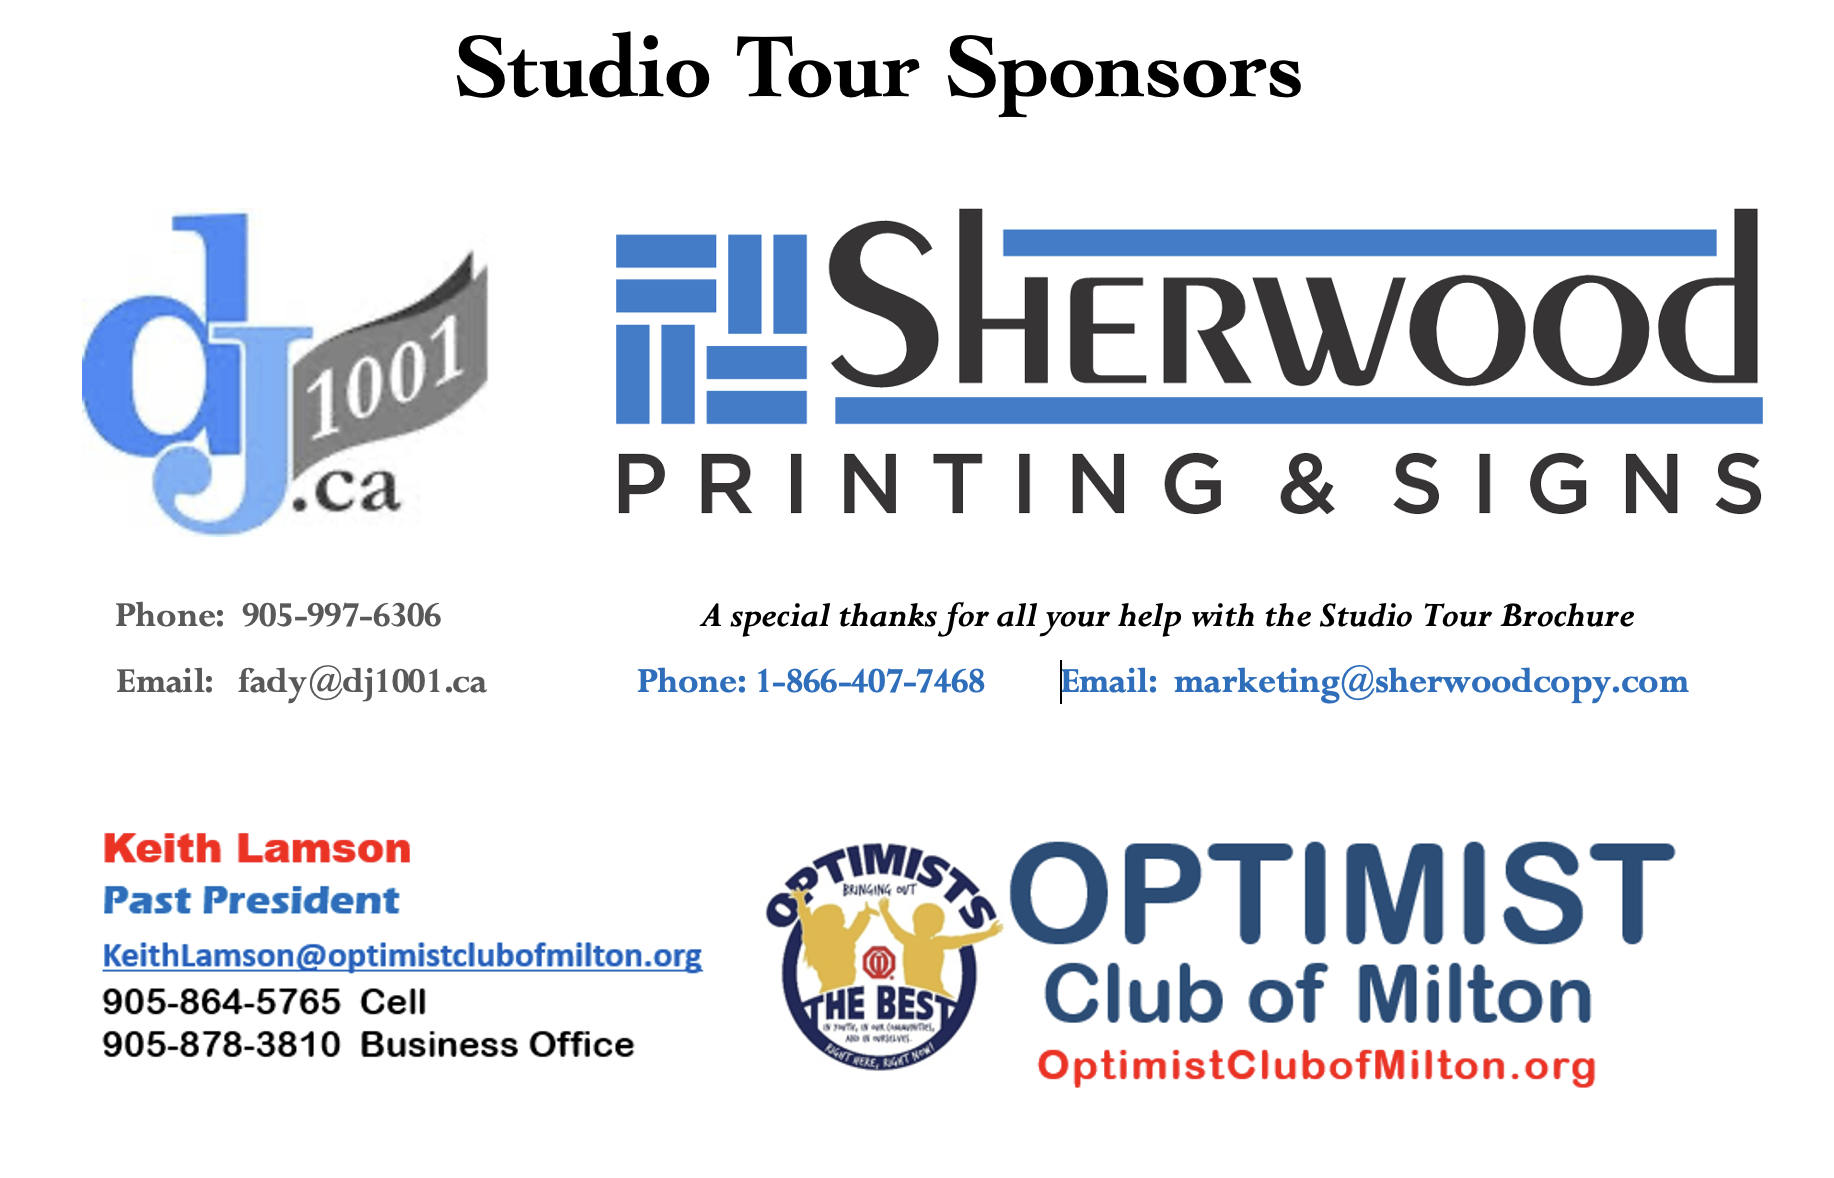 Studio Tour Sponsors dj1001 logo and Optimist Club of Milton logo and Sherwood Printing logo